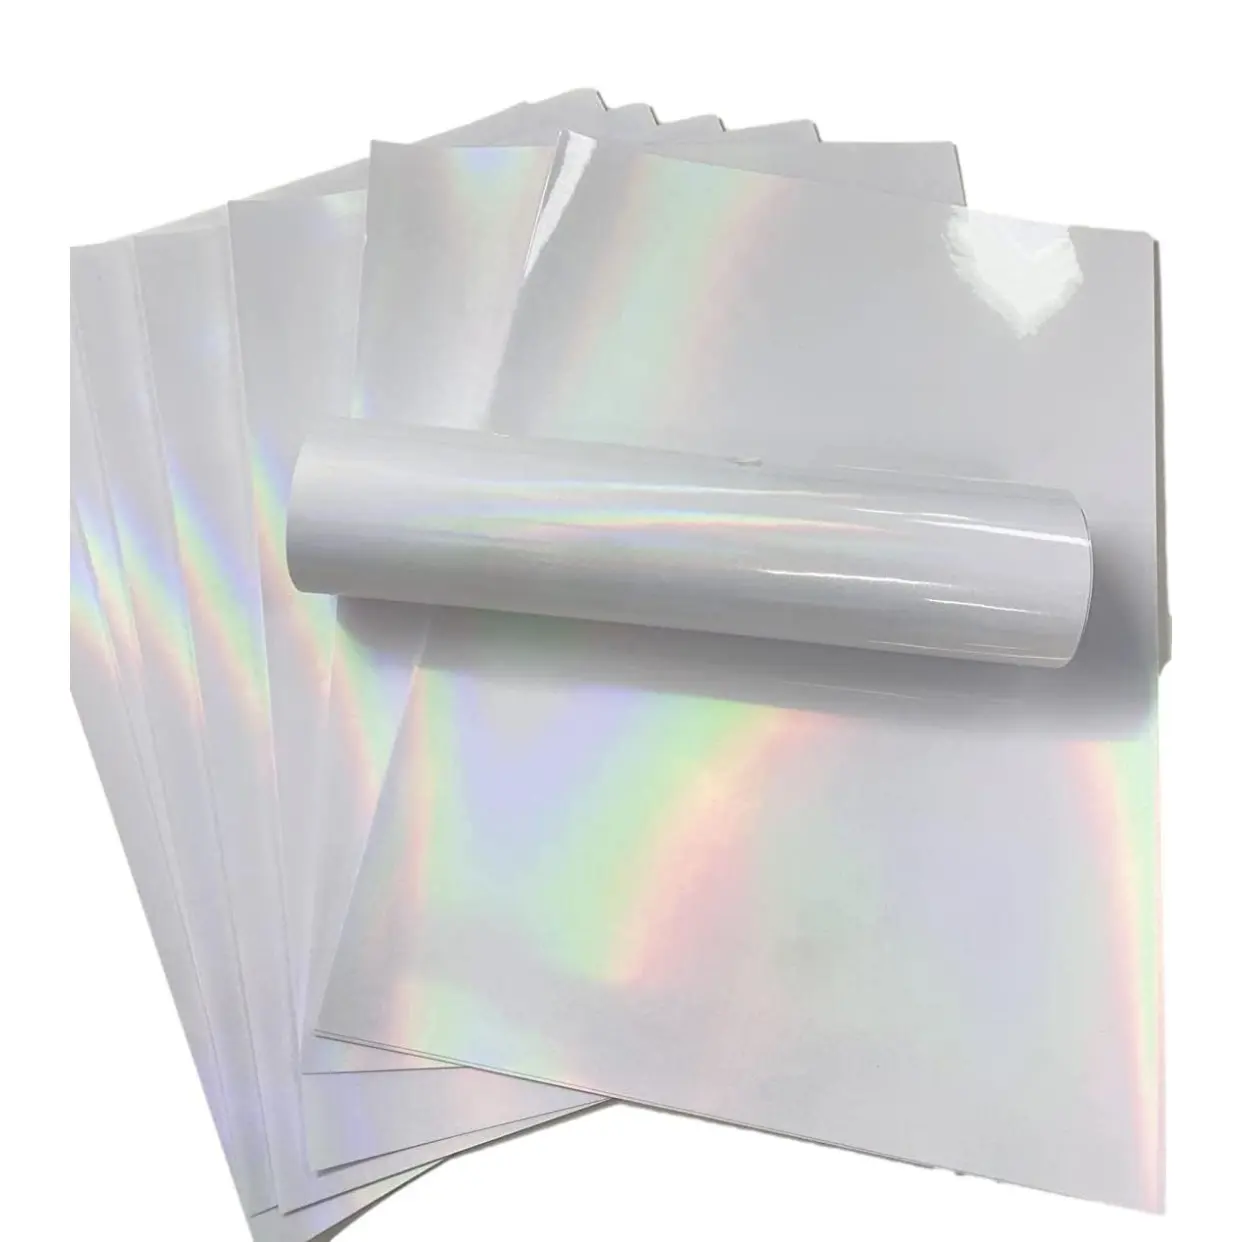 Pegatinas de holograma en blanco o personalizadas listas para enviar, hojas de vinilo de cáscara de huevo, rollos A4, papel adhesivo holográfico de cáscara de huevo con grafiti